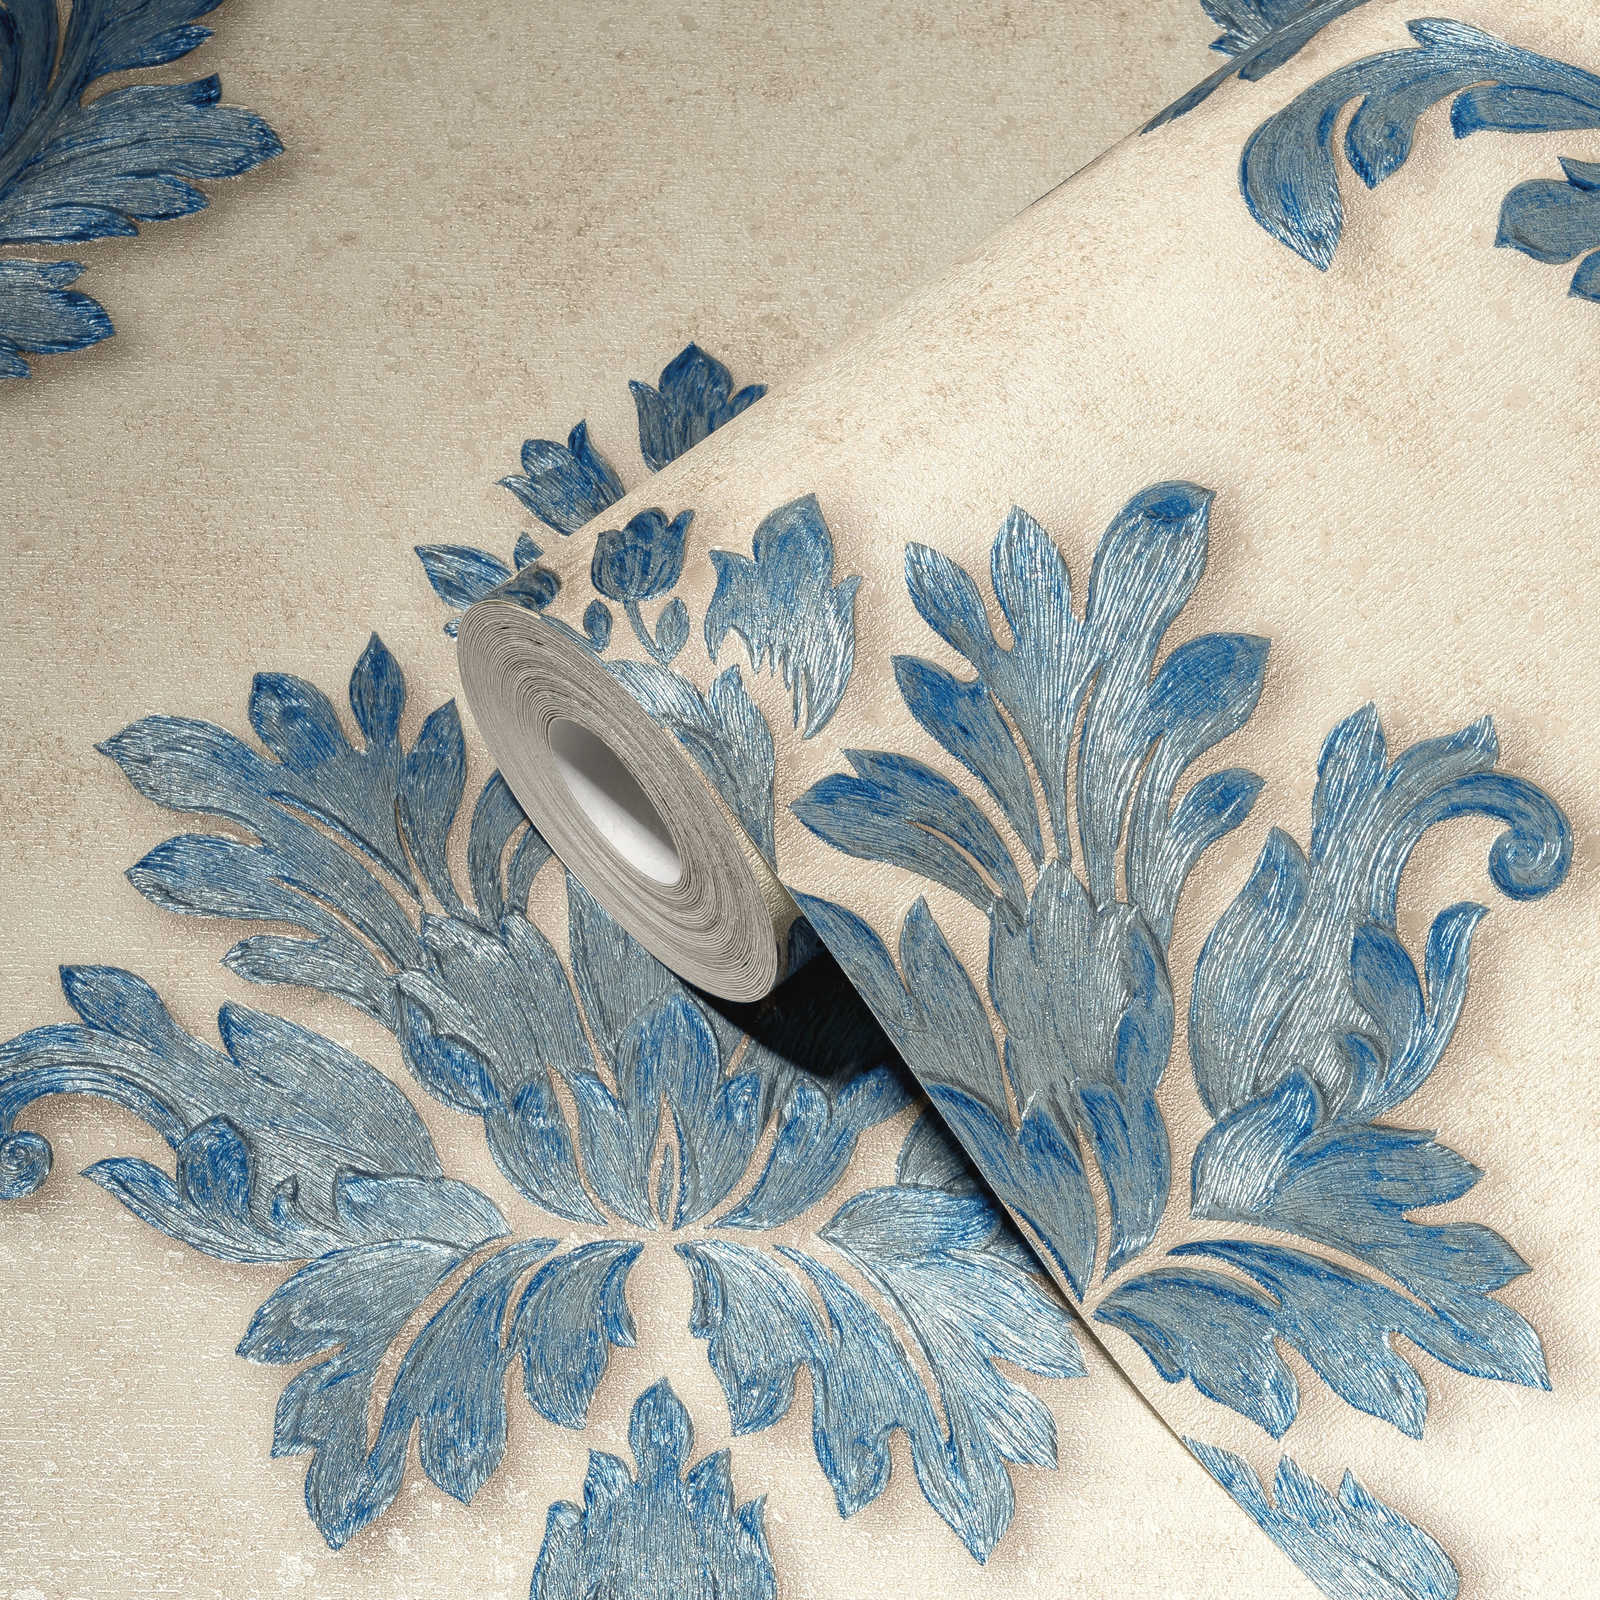             Designer wallpaper floral ornaments & metallic effect - blue, gold, cream
        